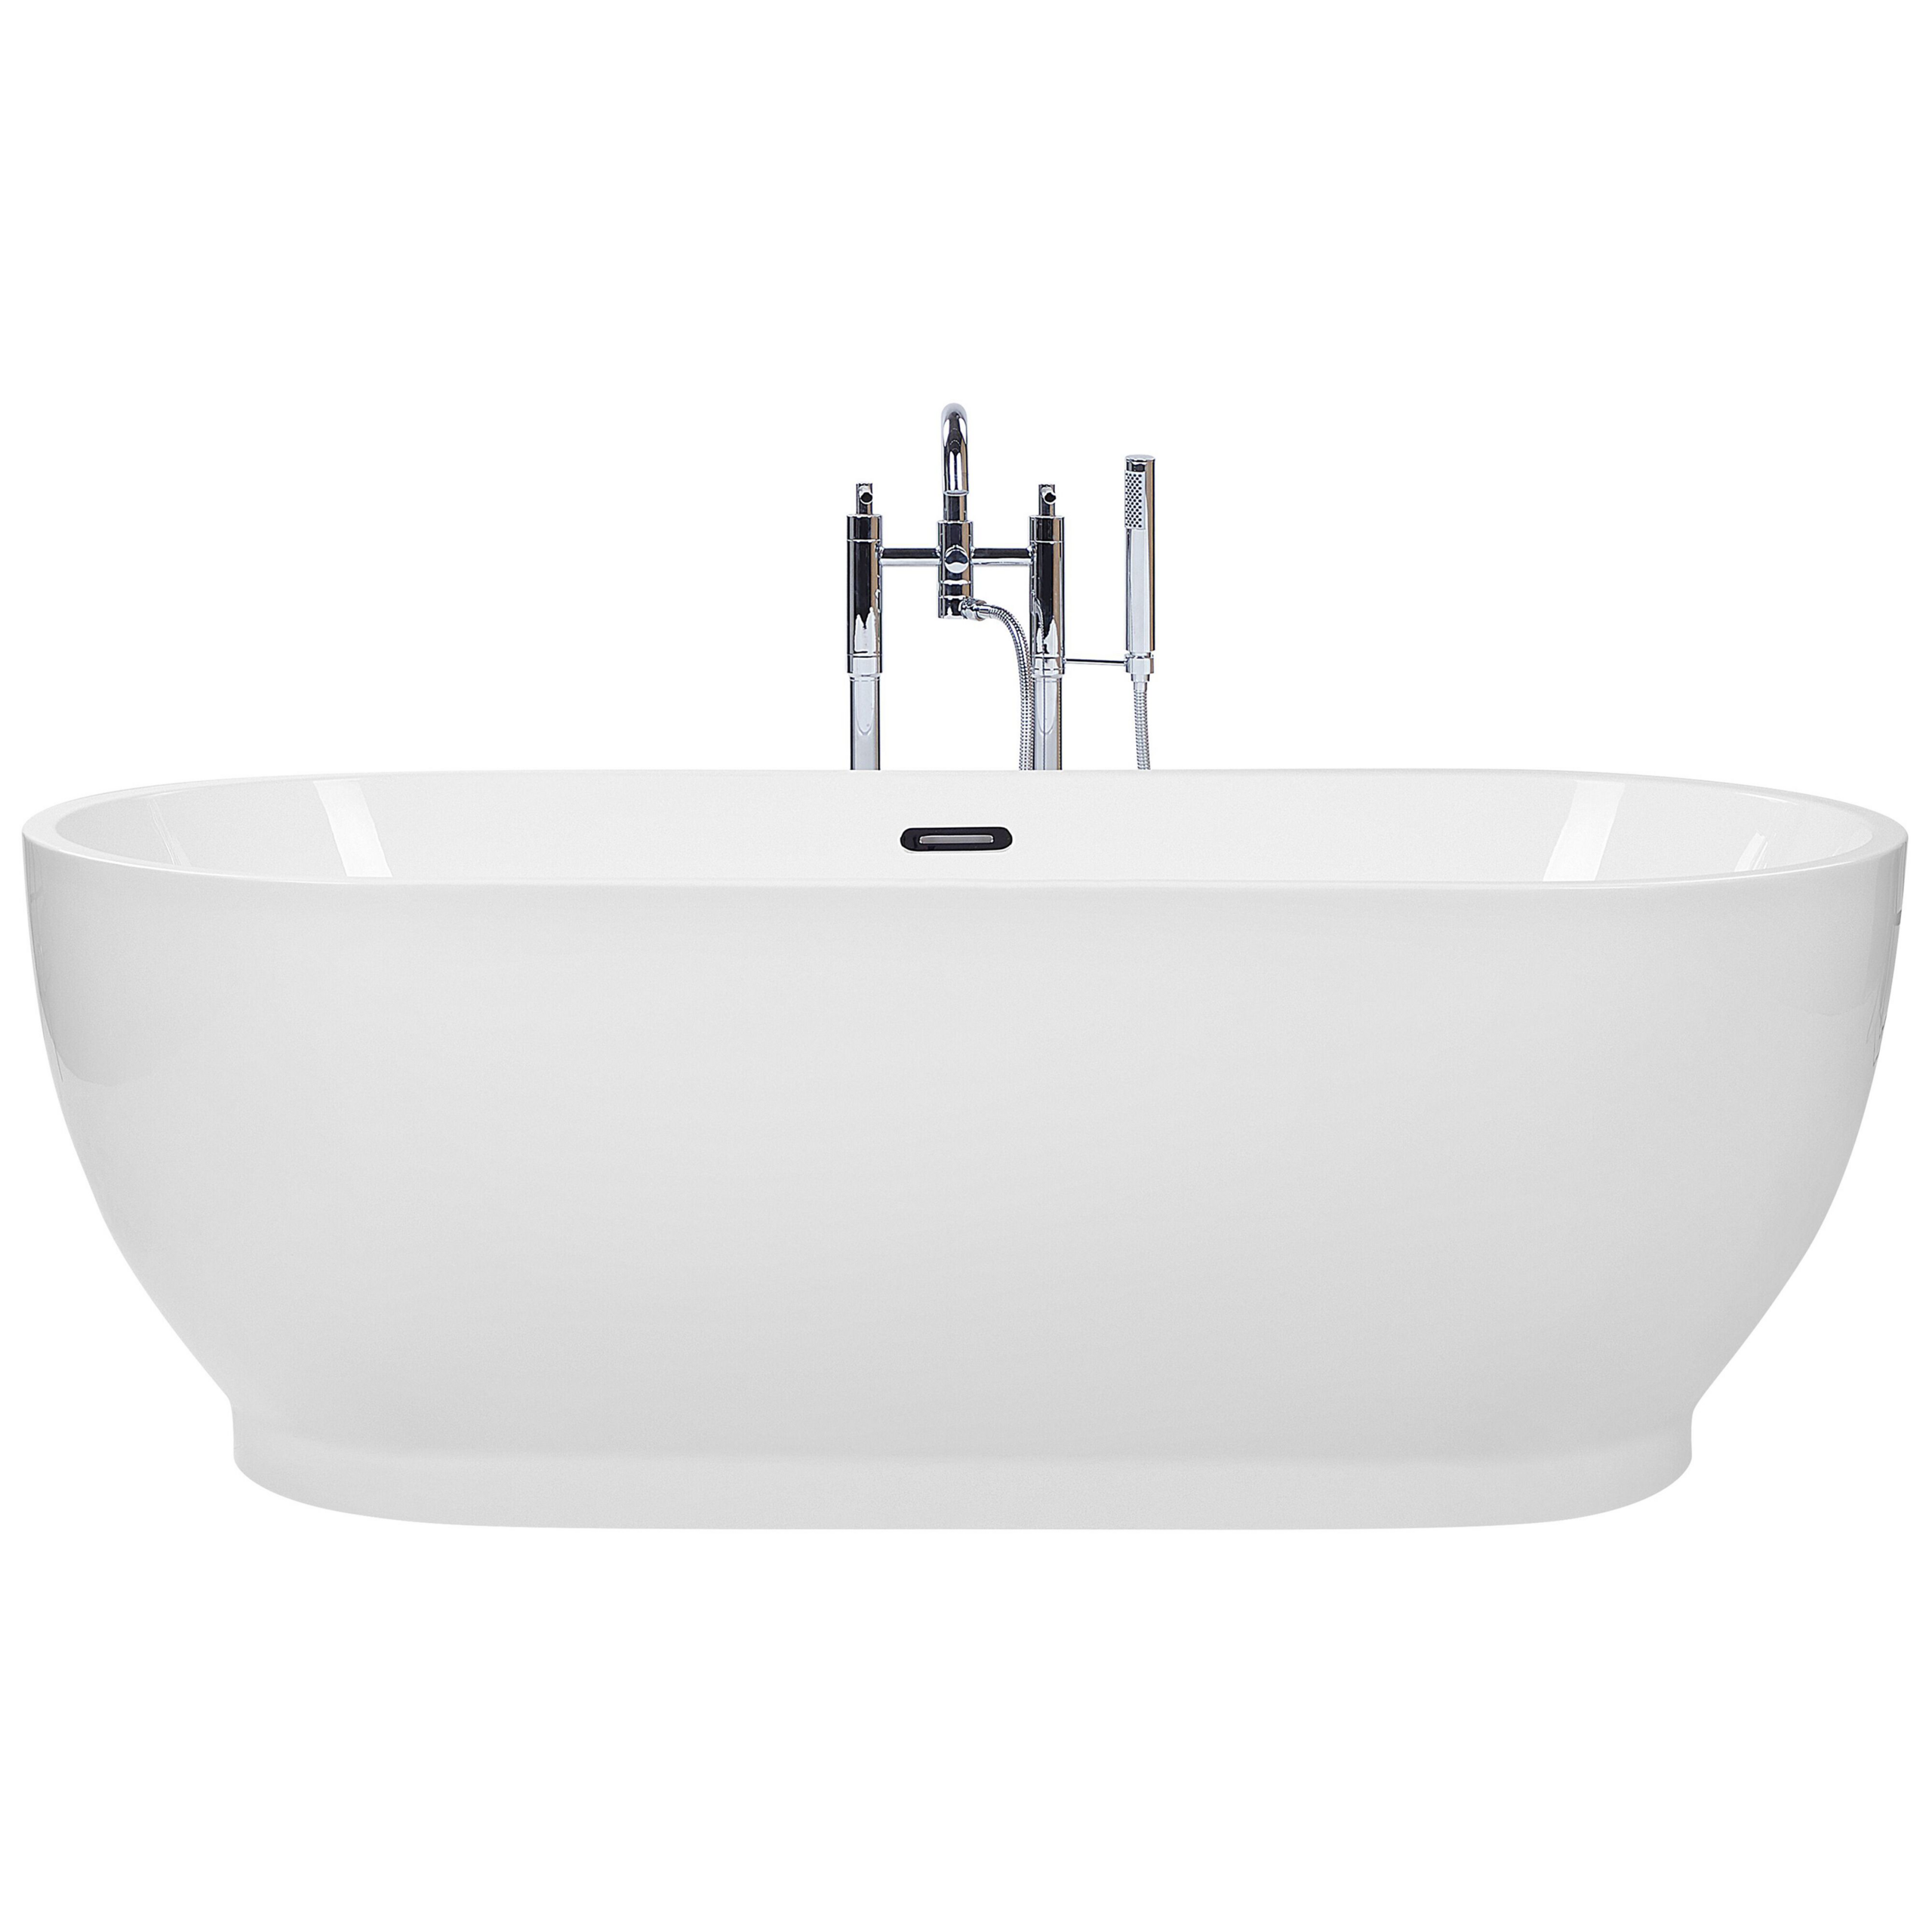 Beliani Freestanding Bath Glossy White Sanitary Acrylic Oval Modern Minimalist Design